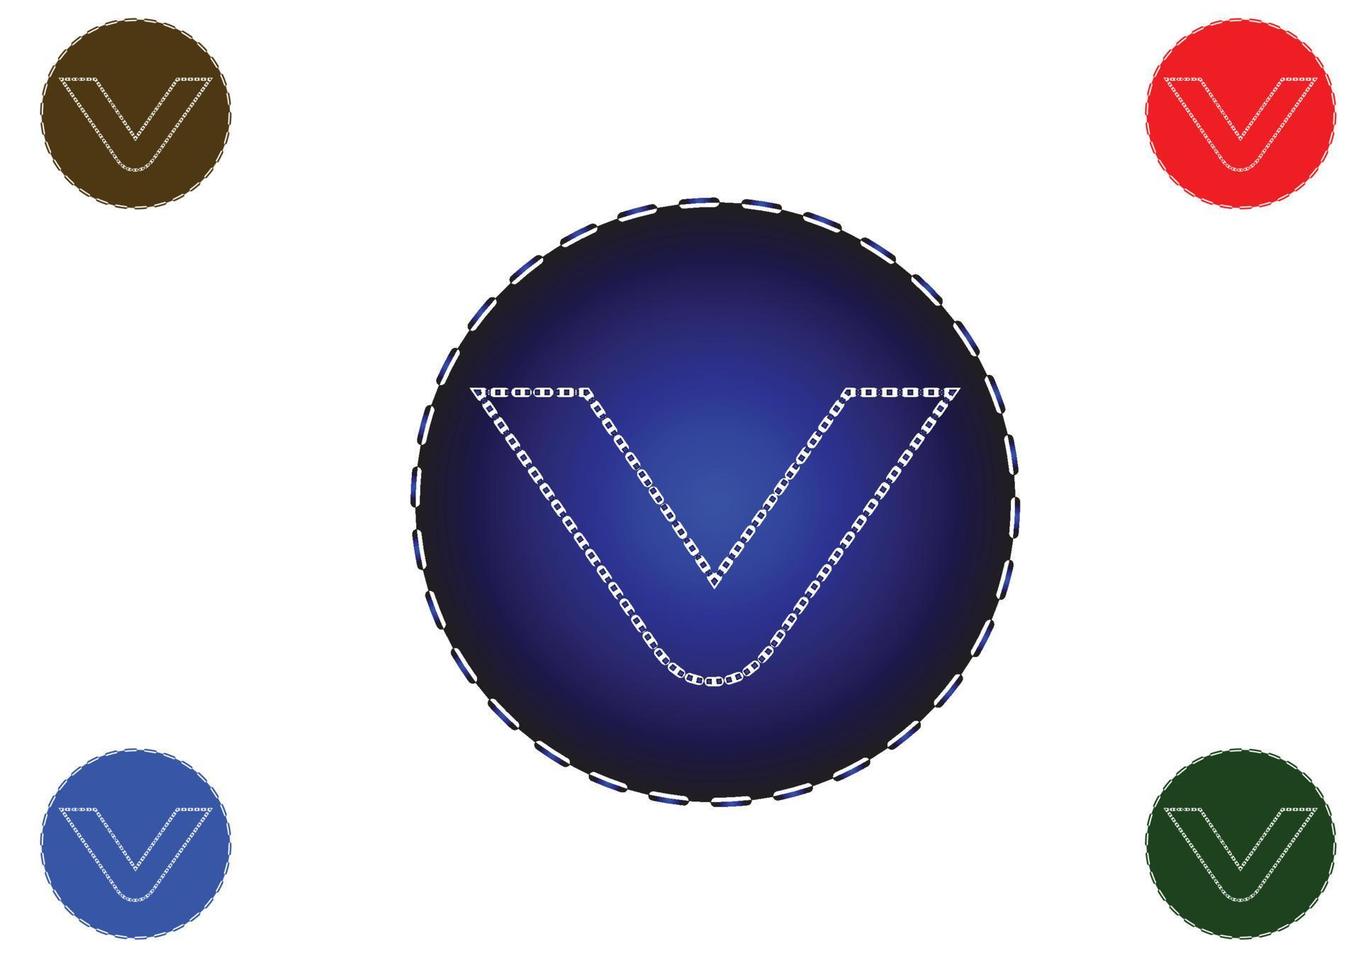 logotipo da letra v e modelo de design de ícone vetor